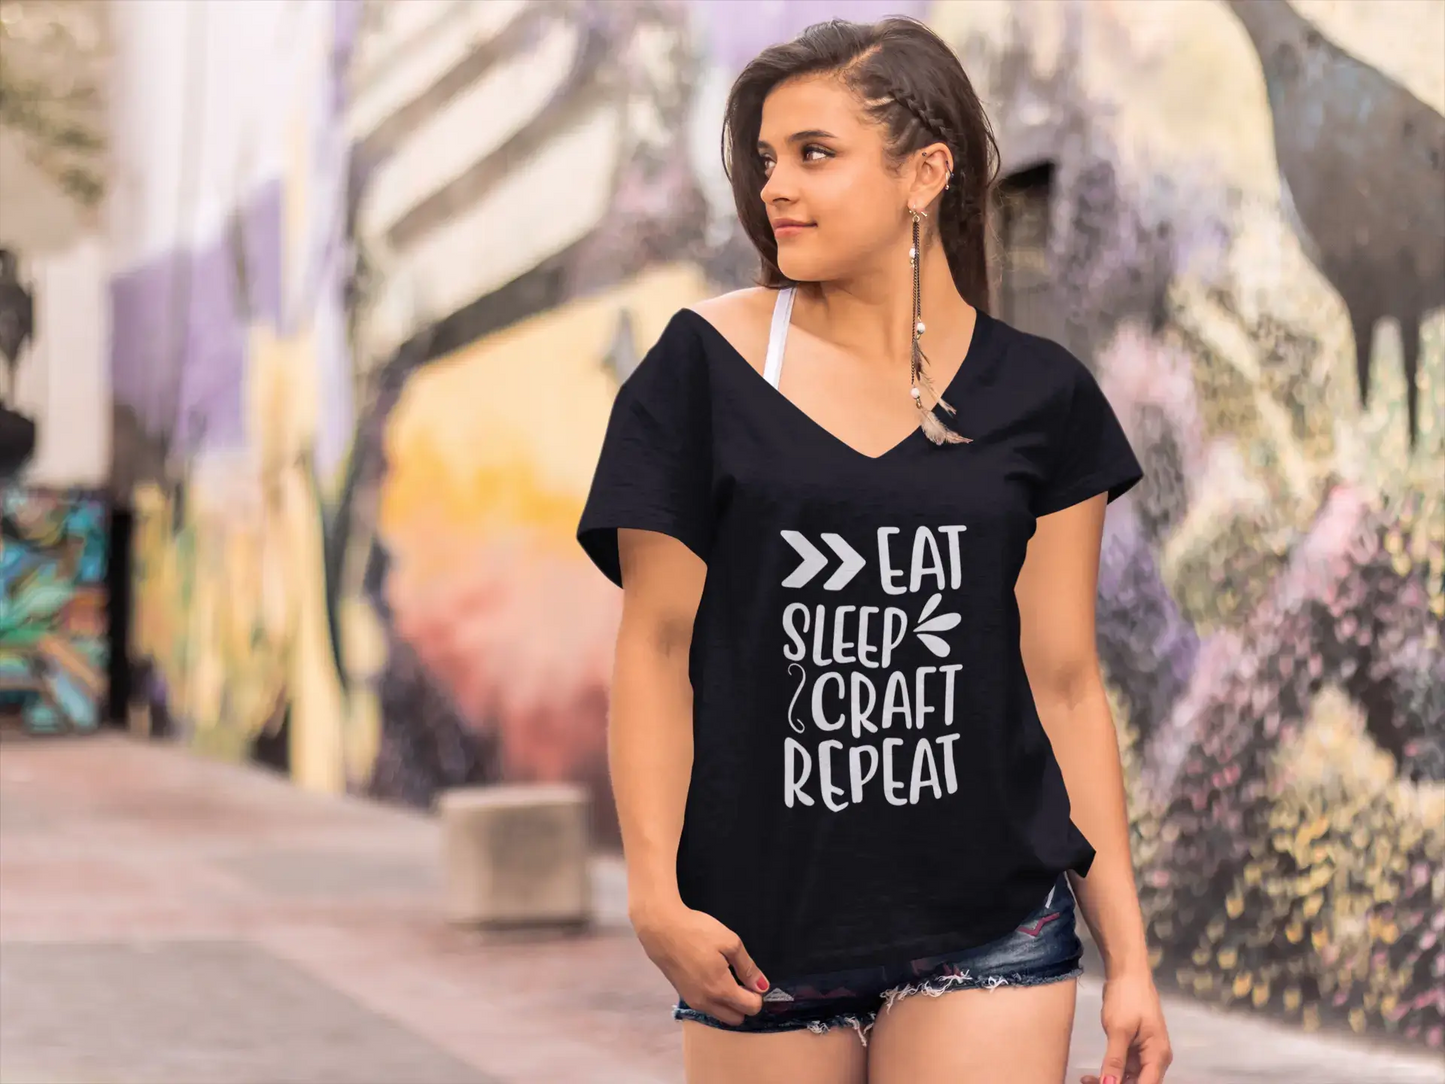 ULTRABASIC Women's T-Shirt Eat Sleep Craft Repeat - Short Sleeve Tee Shirt Tops